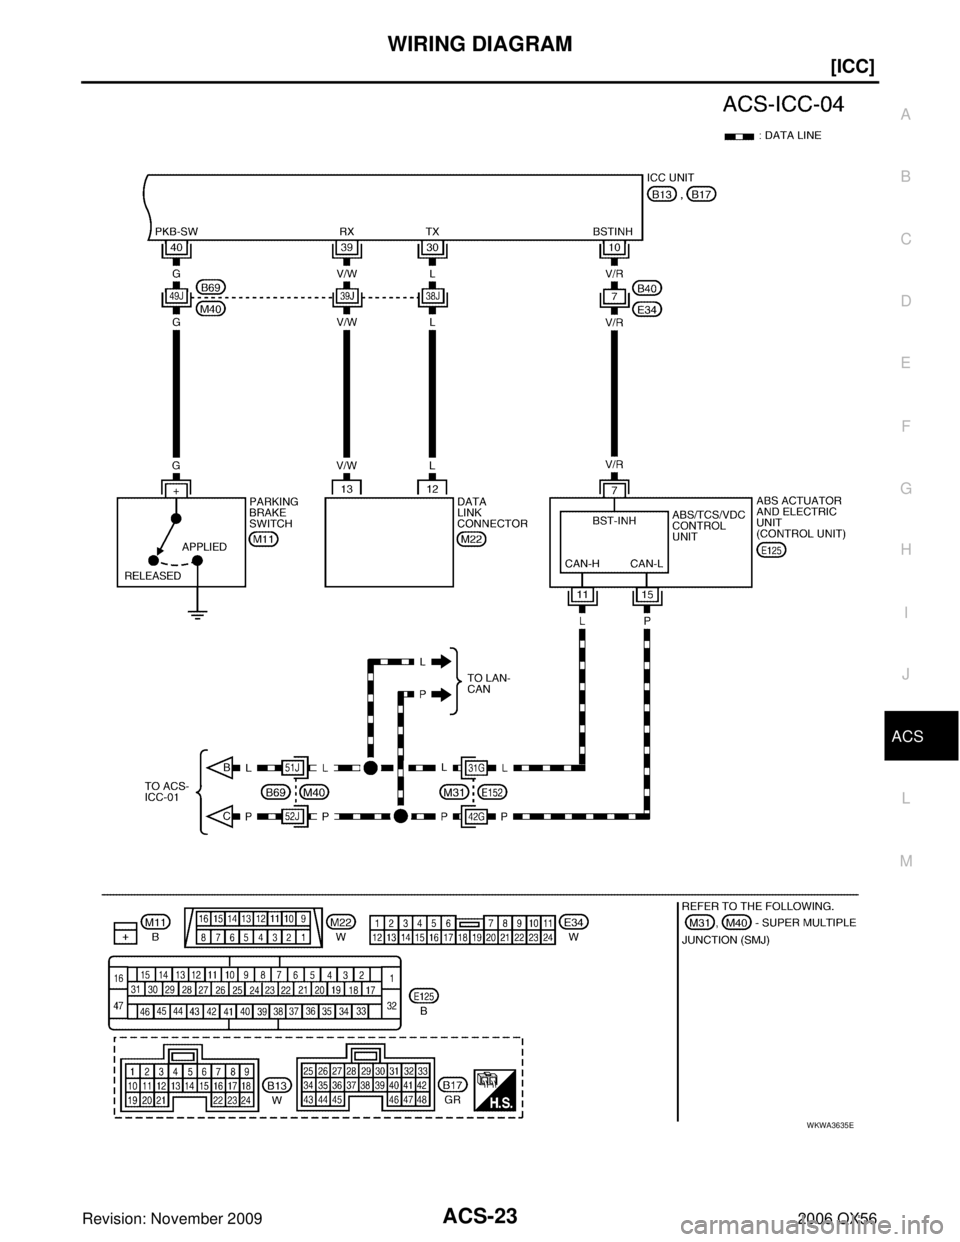 INFINITI QX56 2006  Factory Service Manual WIRING DIAGRAMACS-23
[ICC]
C
DE
F
G H
I
J
L
M A
B
ACS
Revision: November 2009 2006 QX56
WKWA3635E 